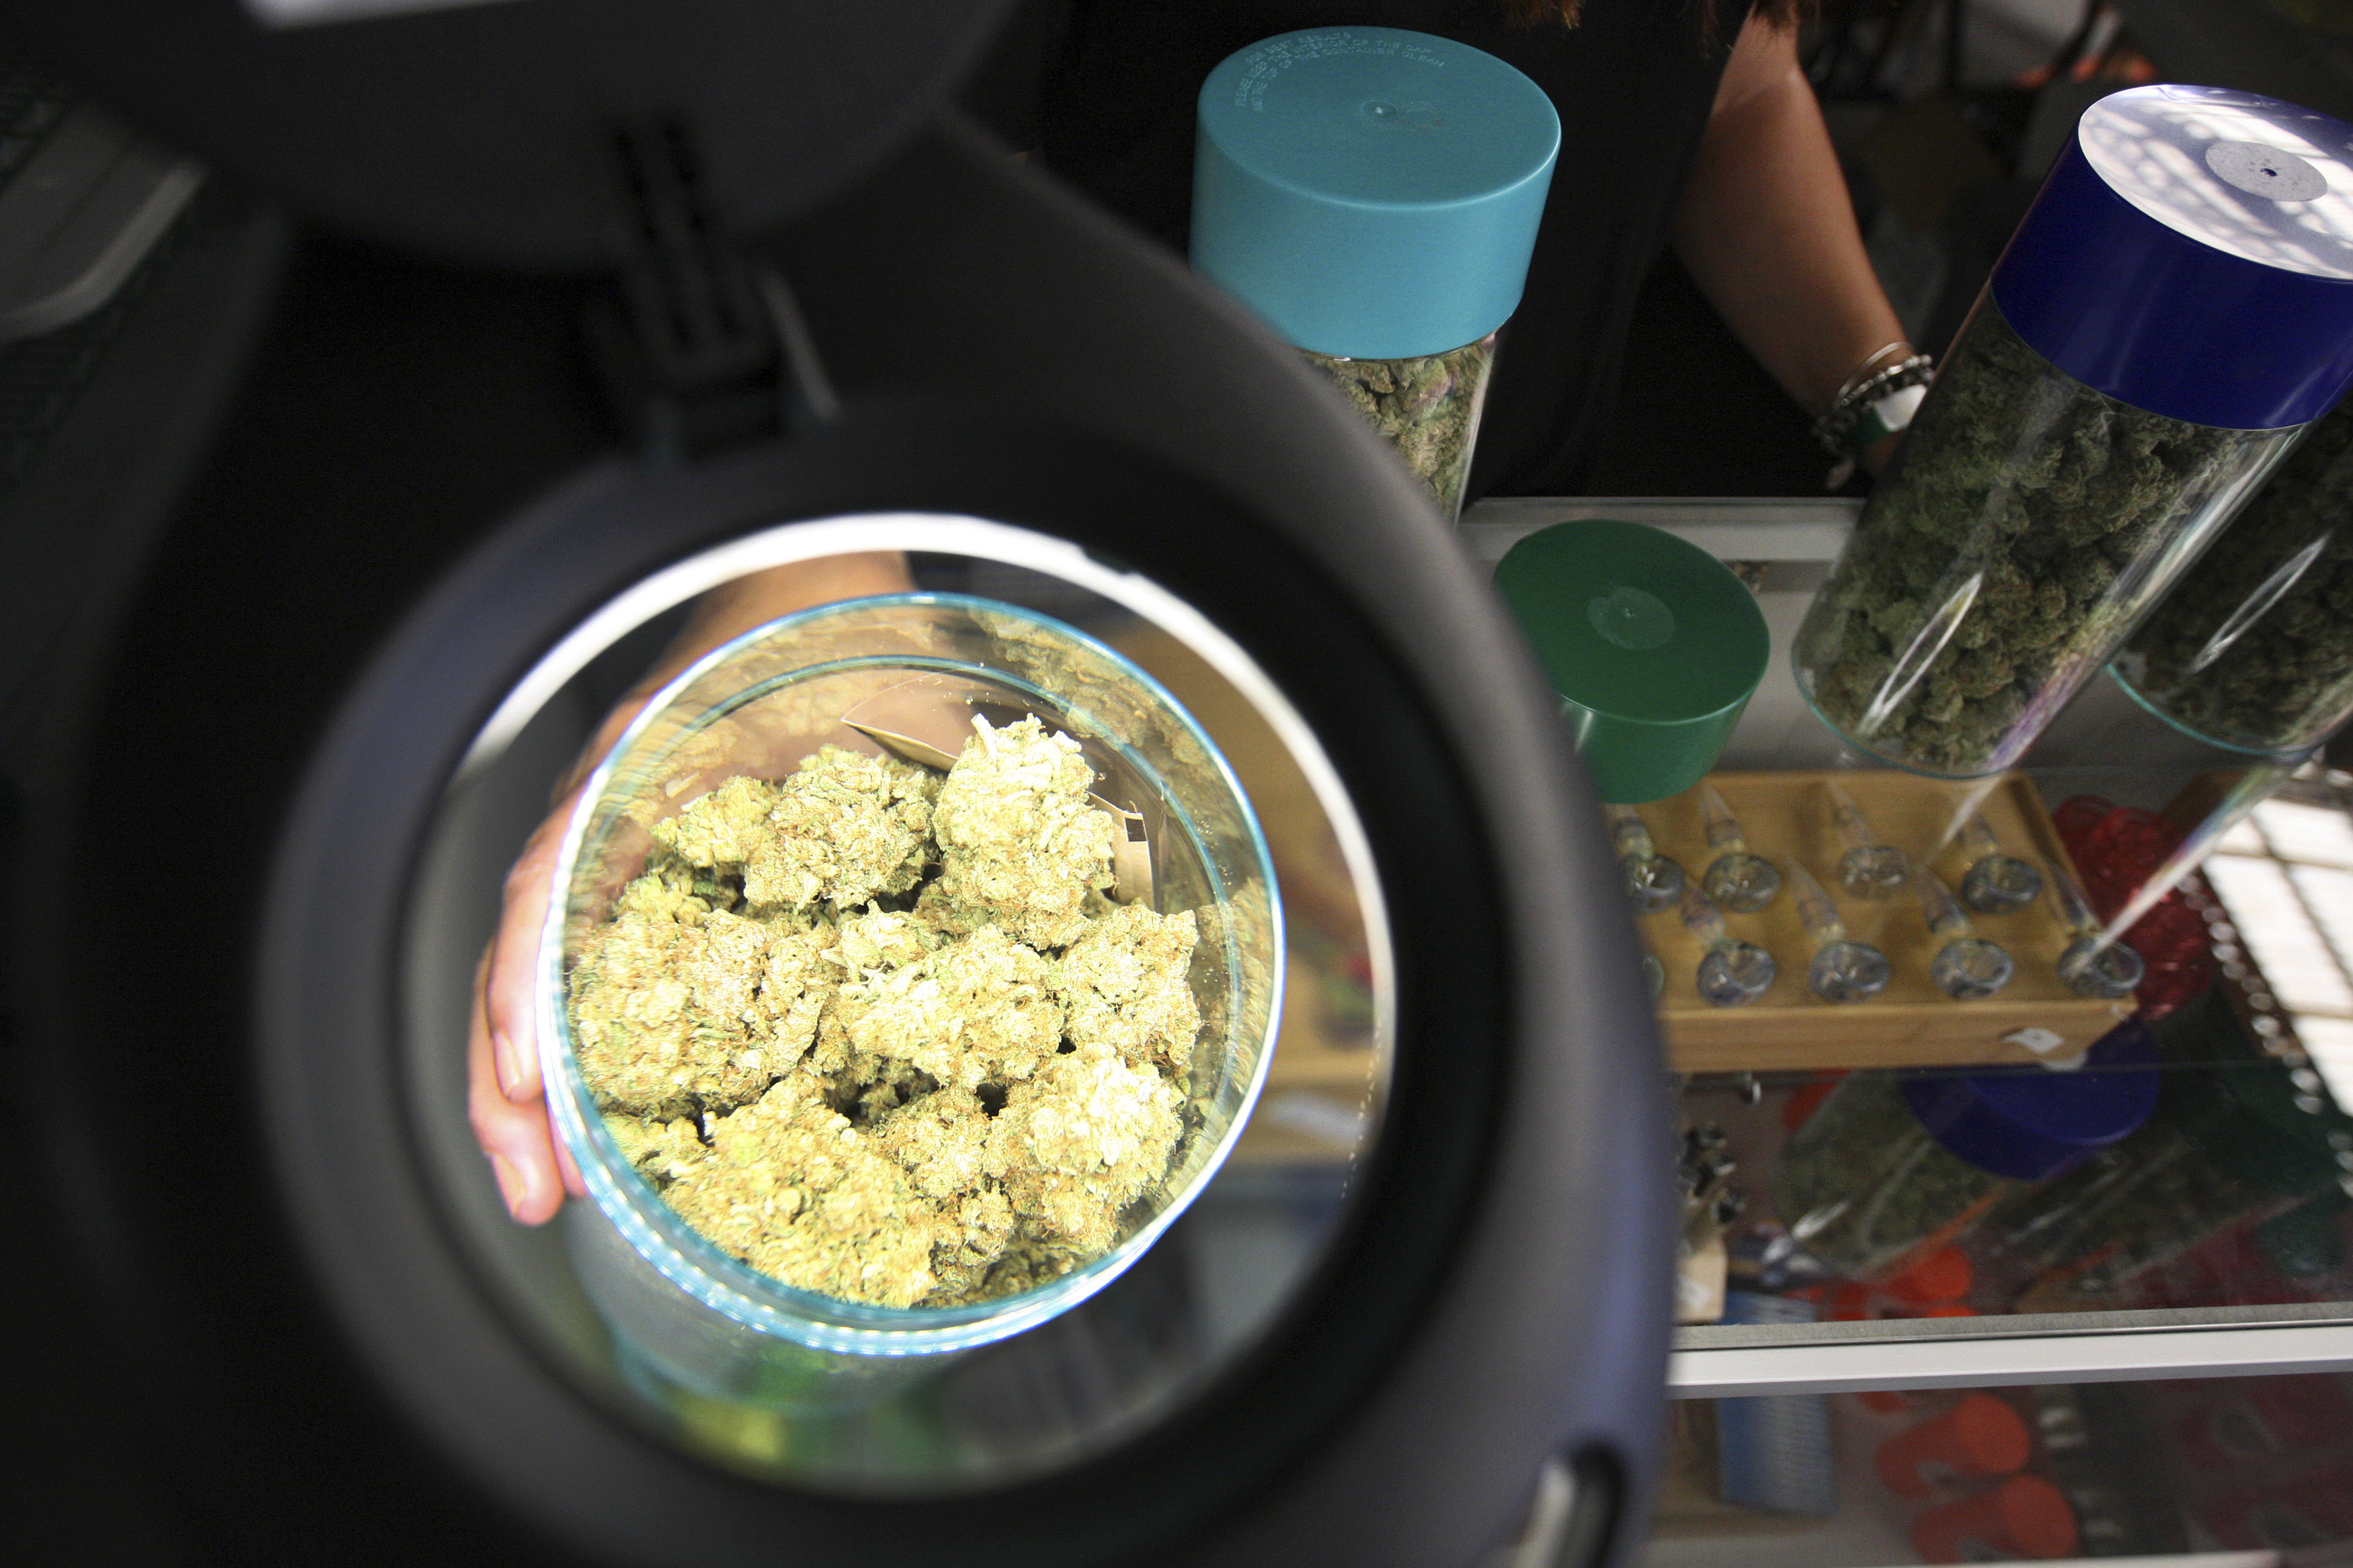 Marijuana is seen under a magnifier at the medical marijuana farmers market in Los Angeles